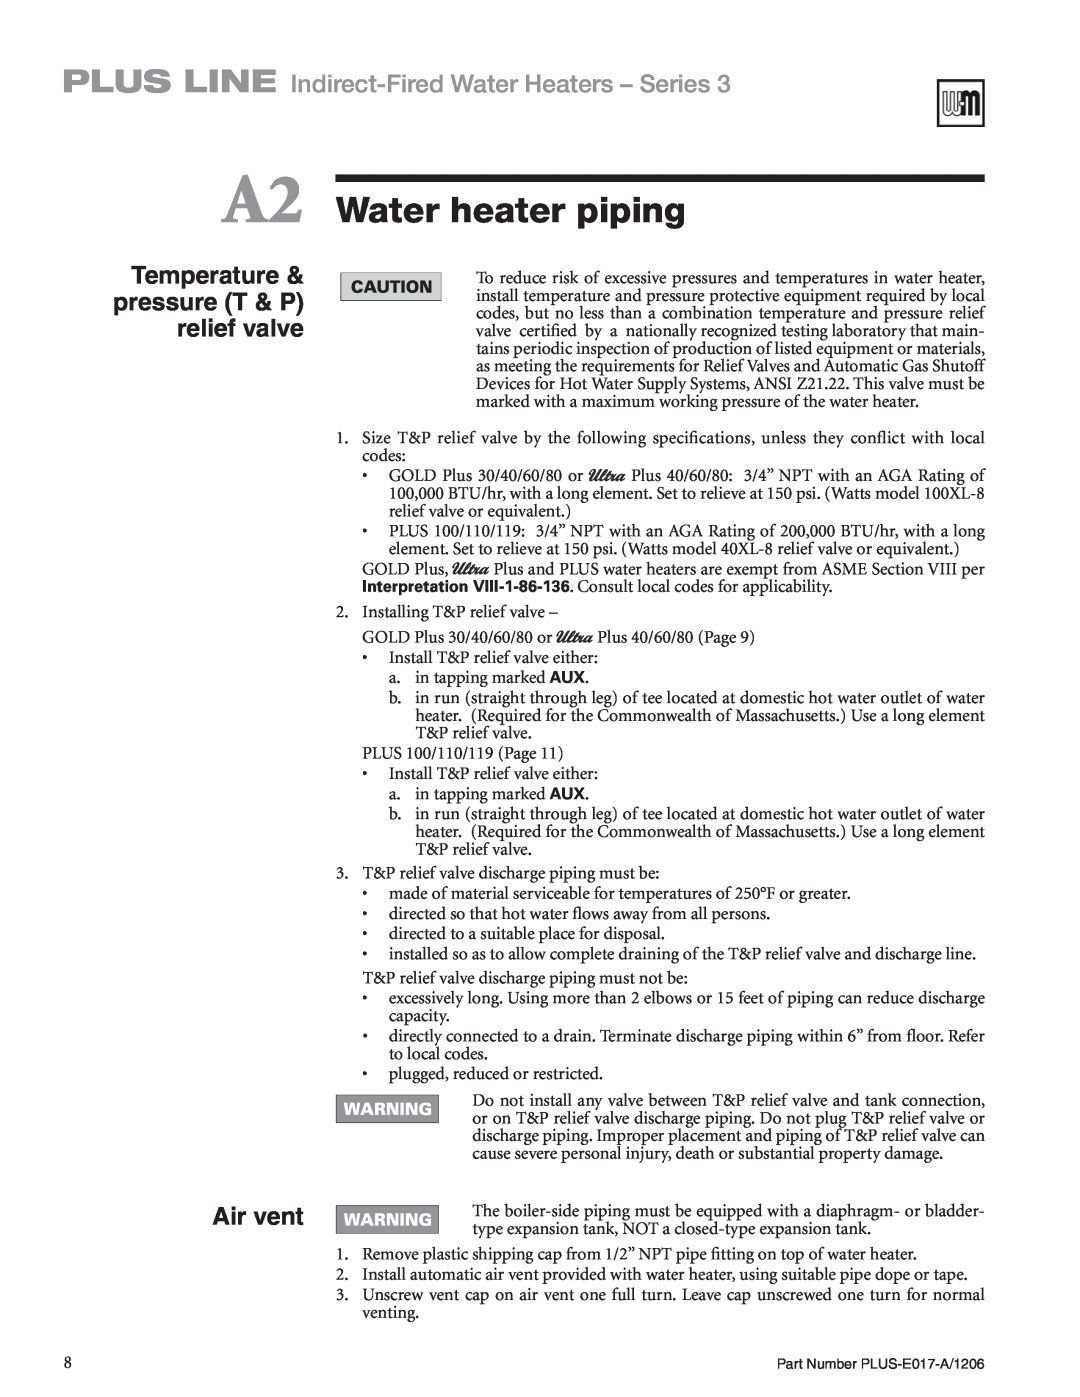 Weil-McLain PLUS-E017-A/1206 manual Water heater piping, Temperature & pressure T & P relief valve, Air vent 